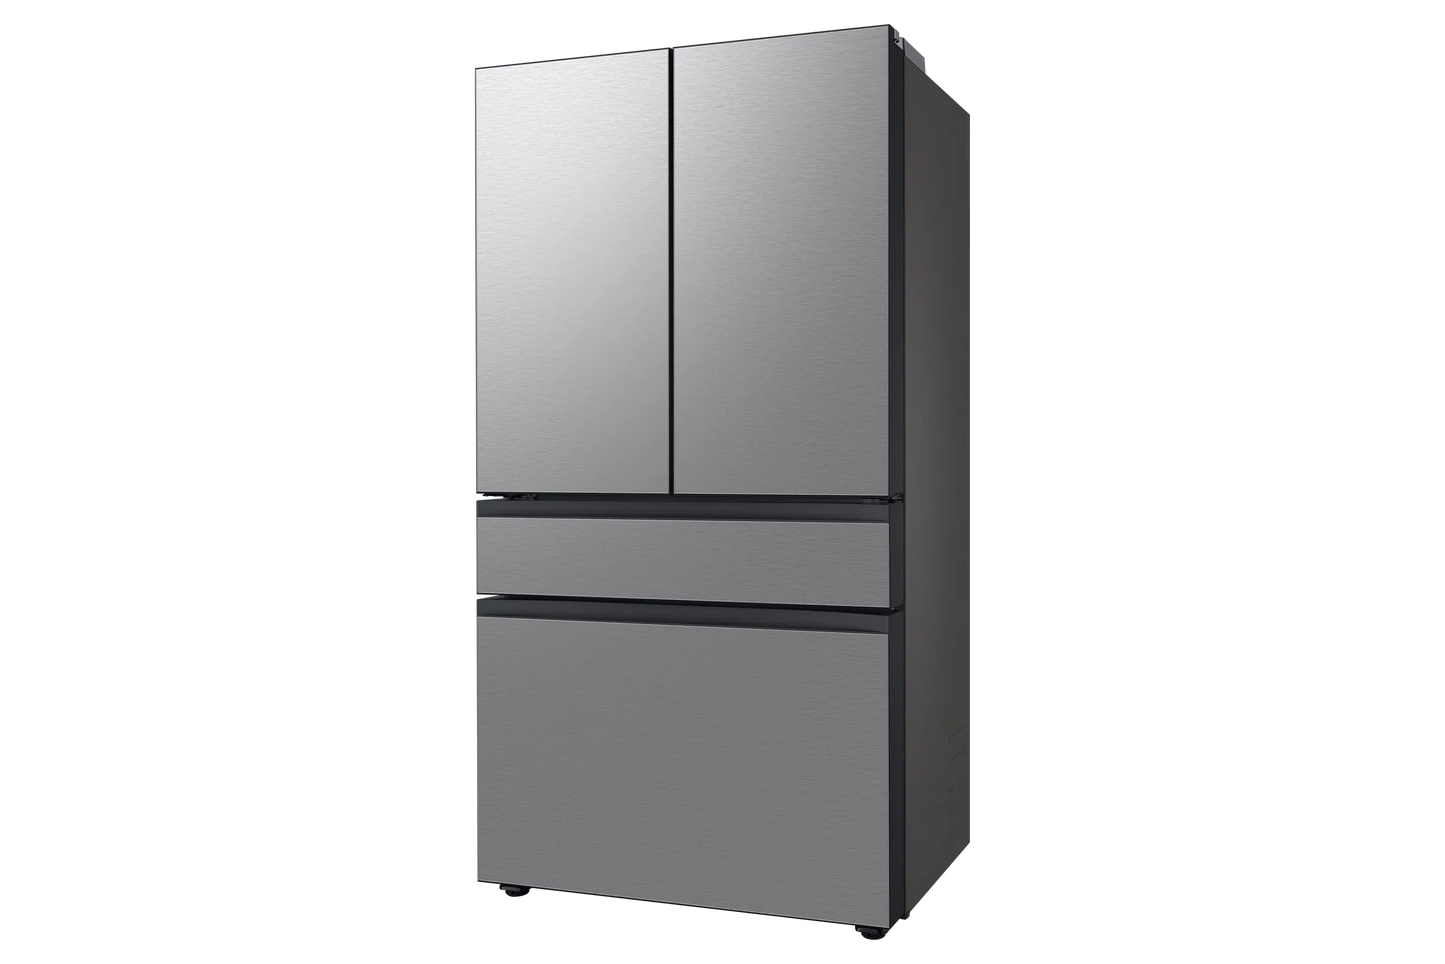 Bespoke 4-Door French Door Refrigerator (23 cu. ft.) with AutoFill Water Pitcher in Stainless Steel - SAMSUNG- RF23BB8200QLAA